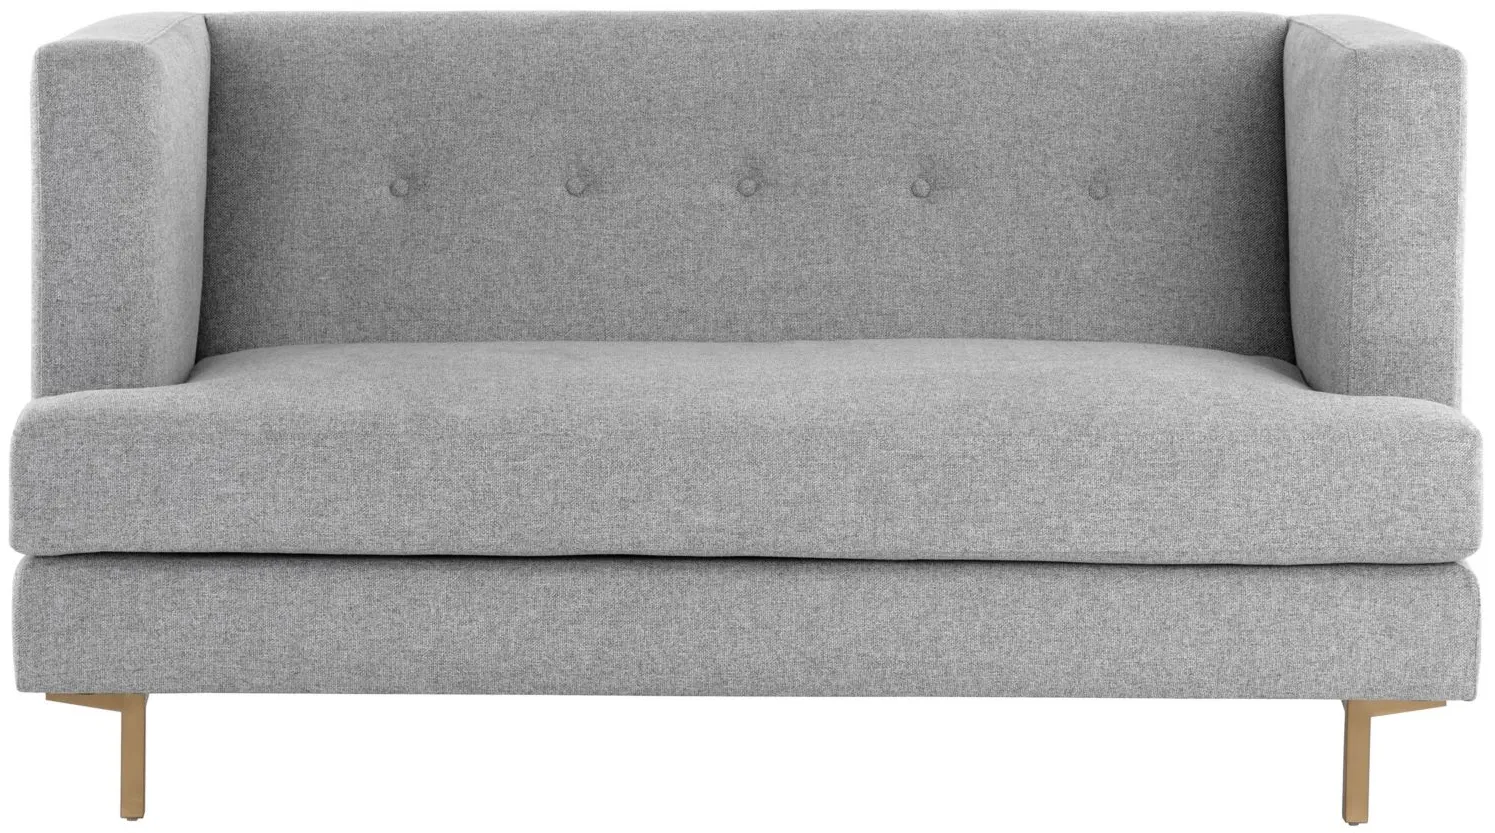 Sheridan 2 Seater Sofa in Soho Gray by Sunpan